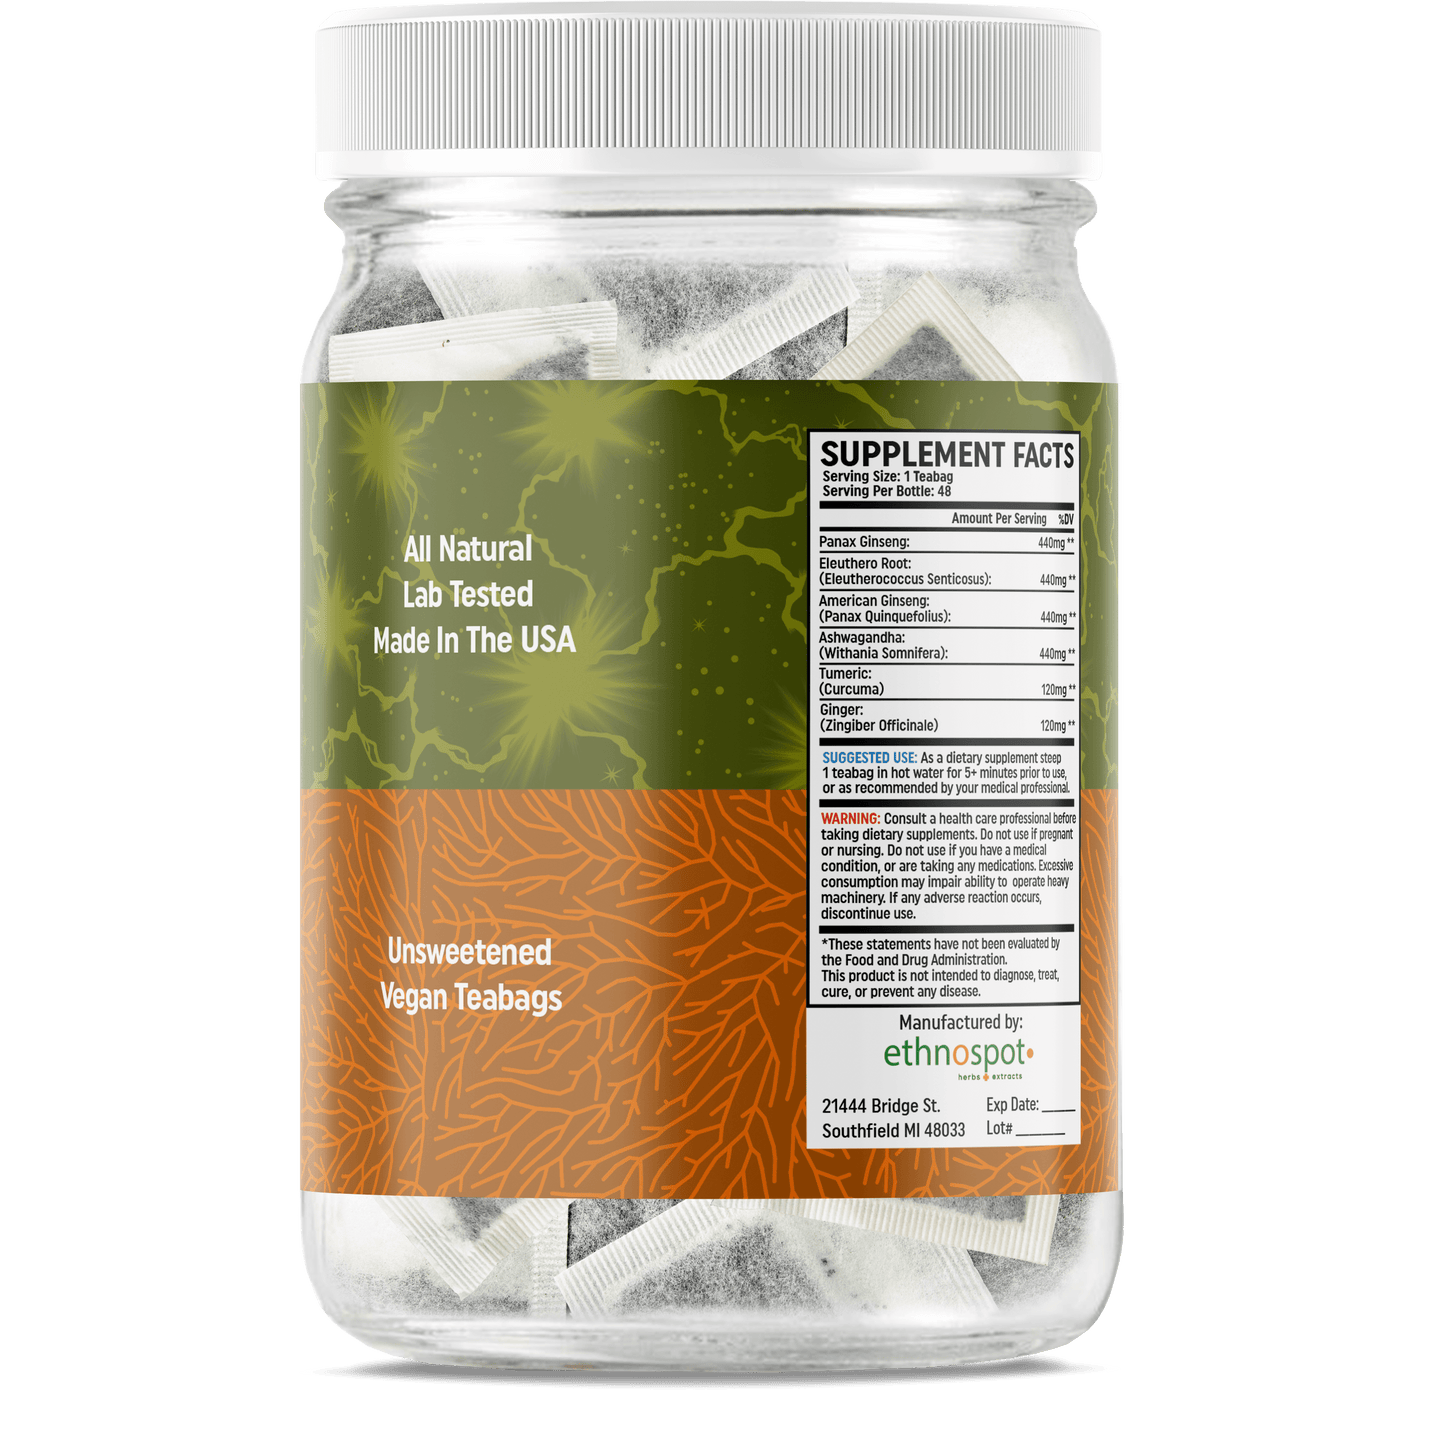 VitalRoots Teabags - Immune Support & Vitality Promoting Herbal Tea